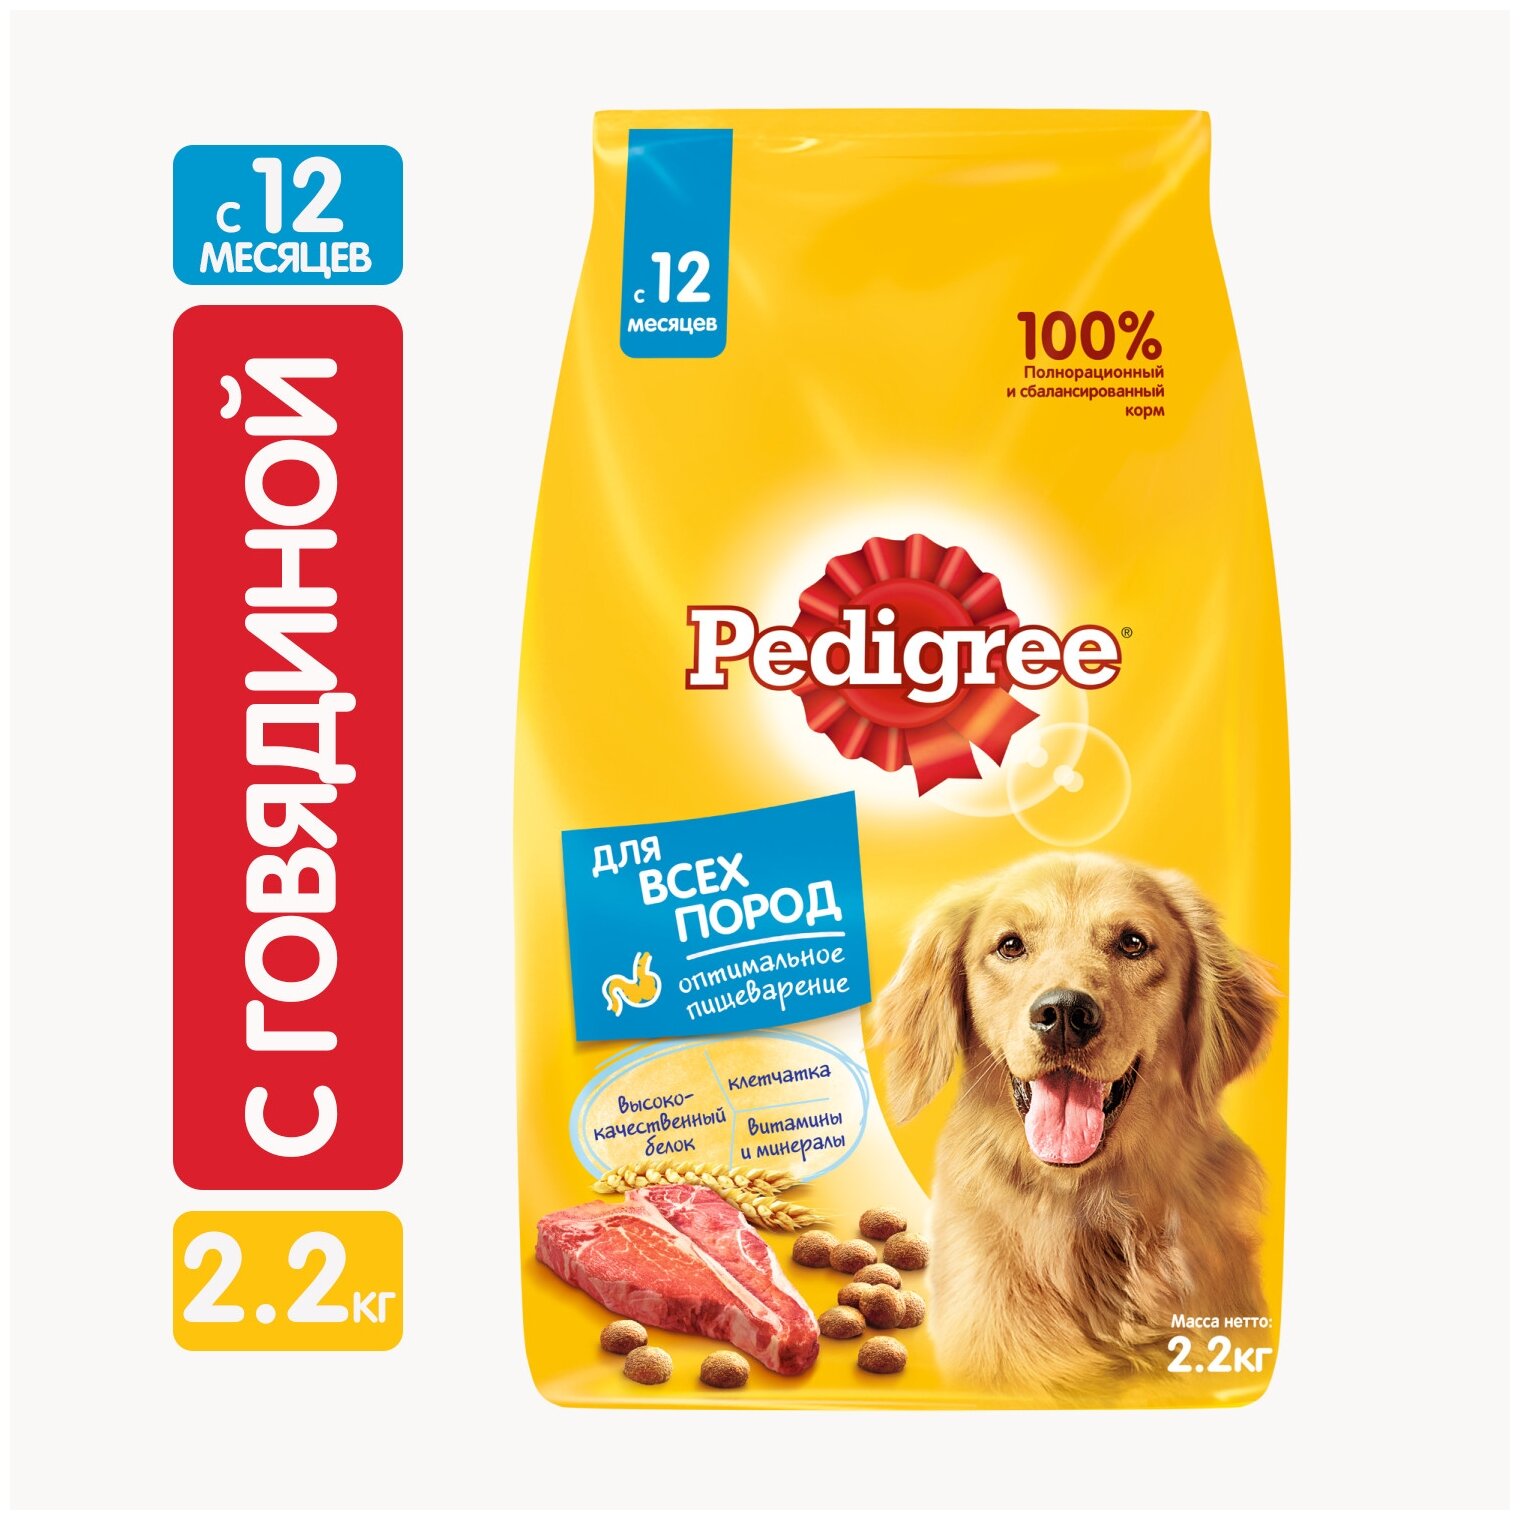 Pedigree корм для взрослых собак всех пород Говядина, 2,2 кг.